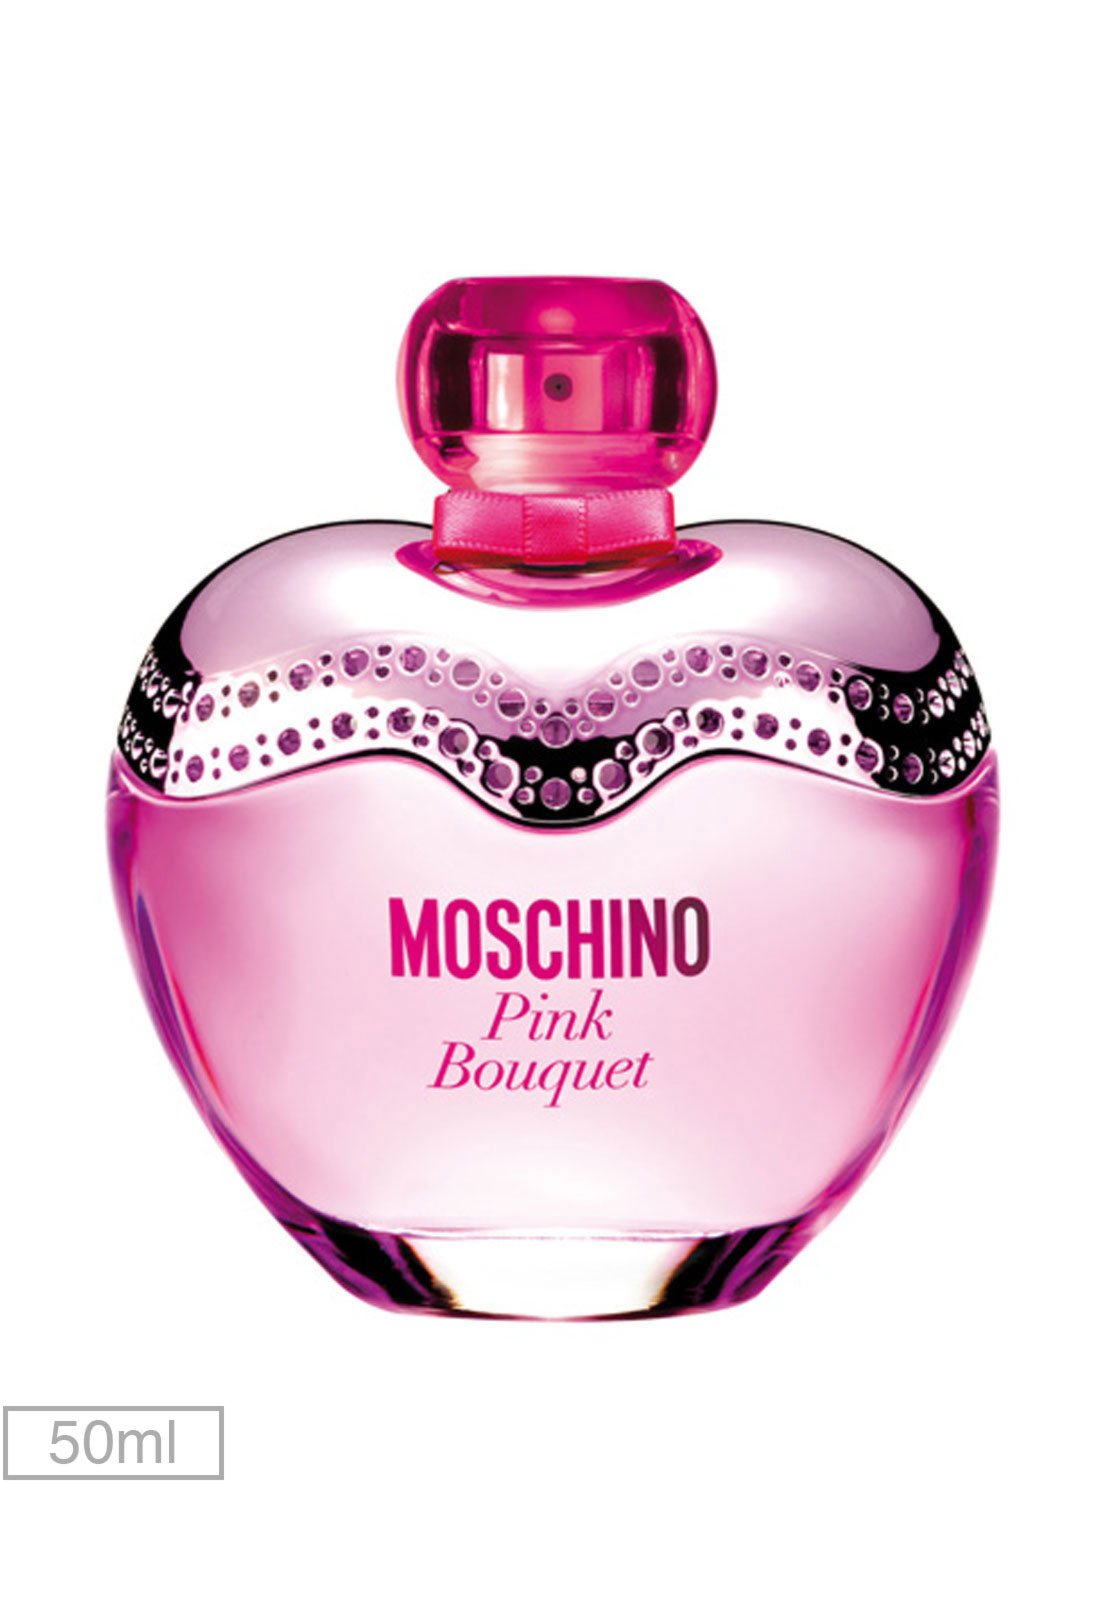 Perfume Pink Bouquet Moschino 50ml - Compre Agora